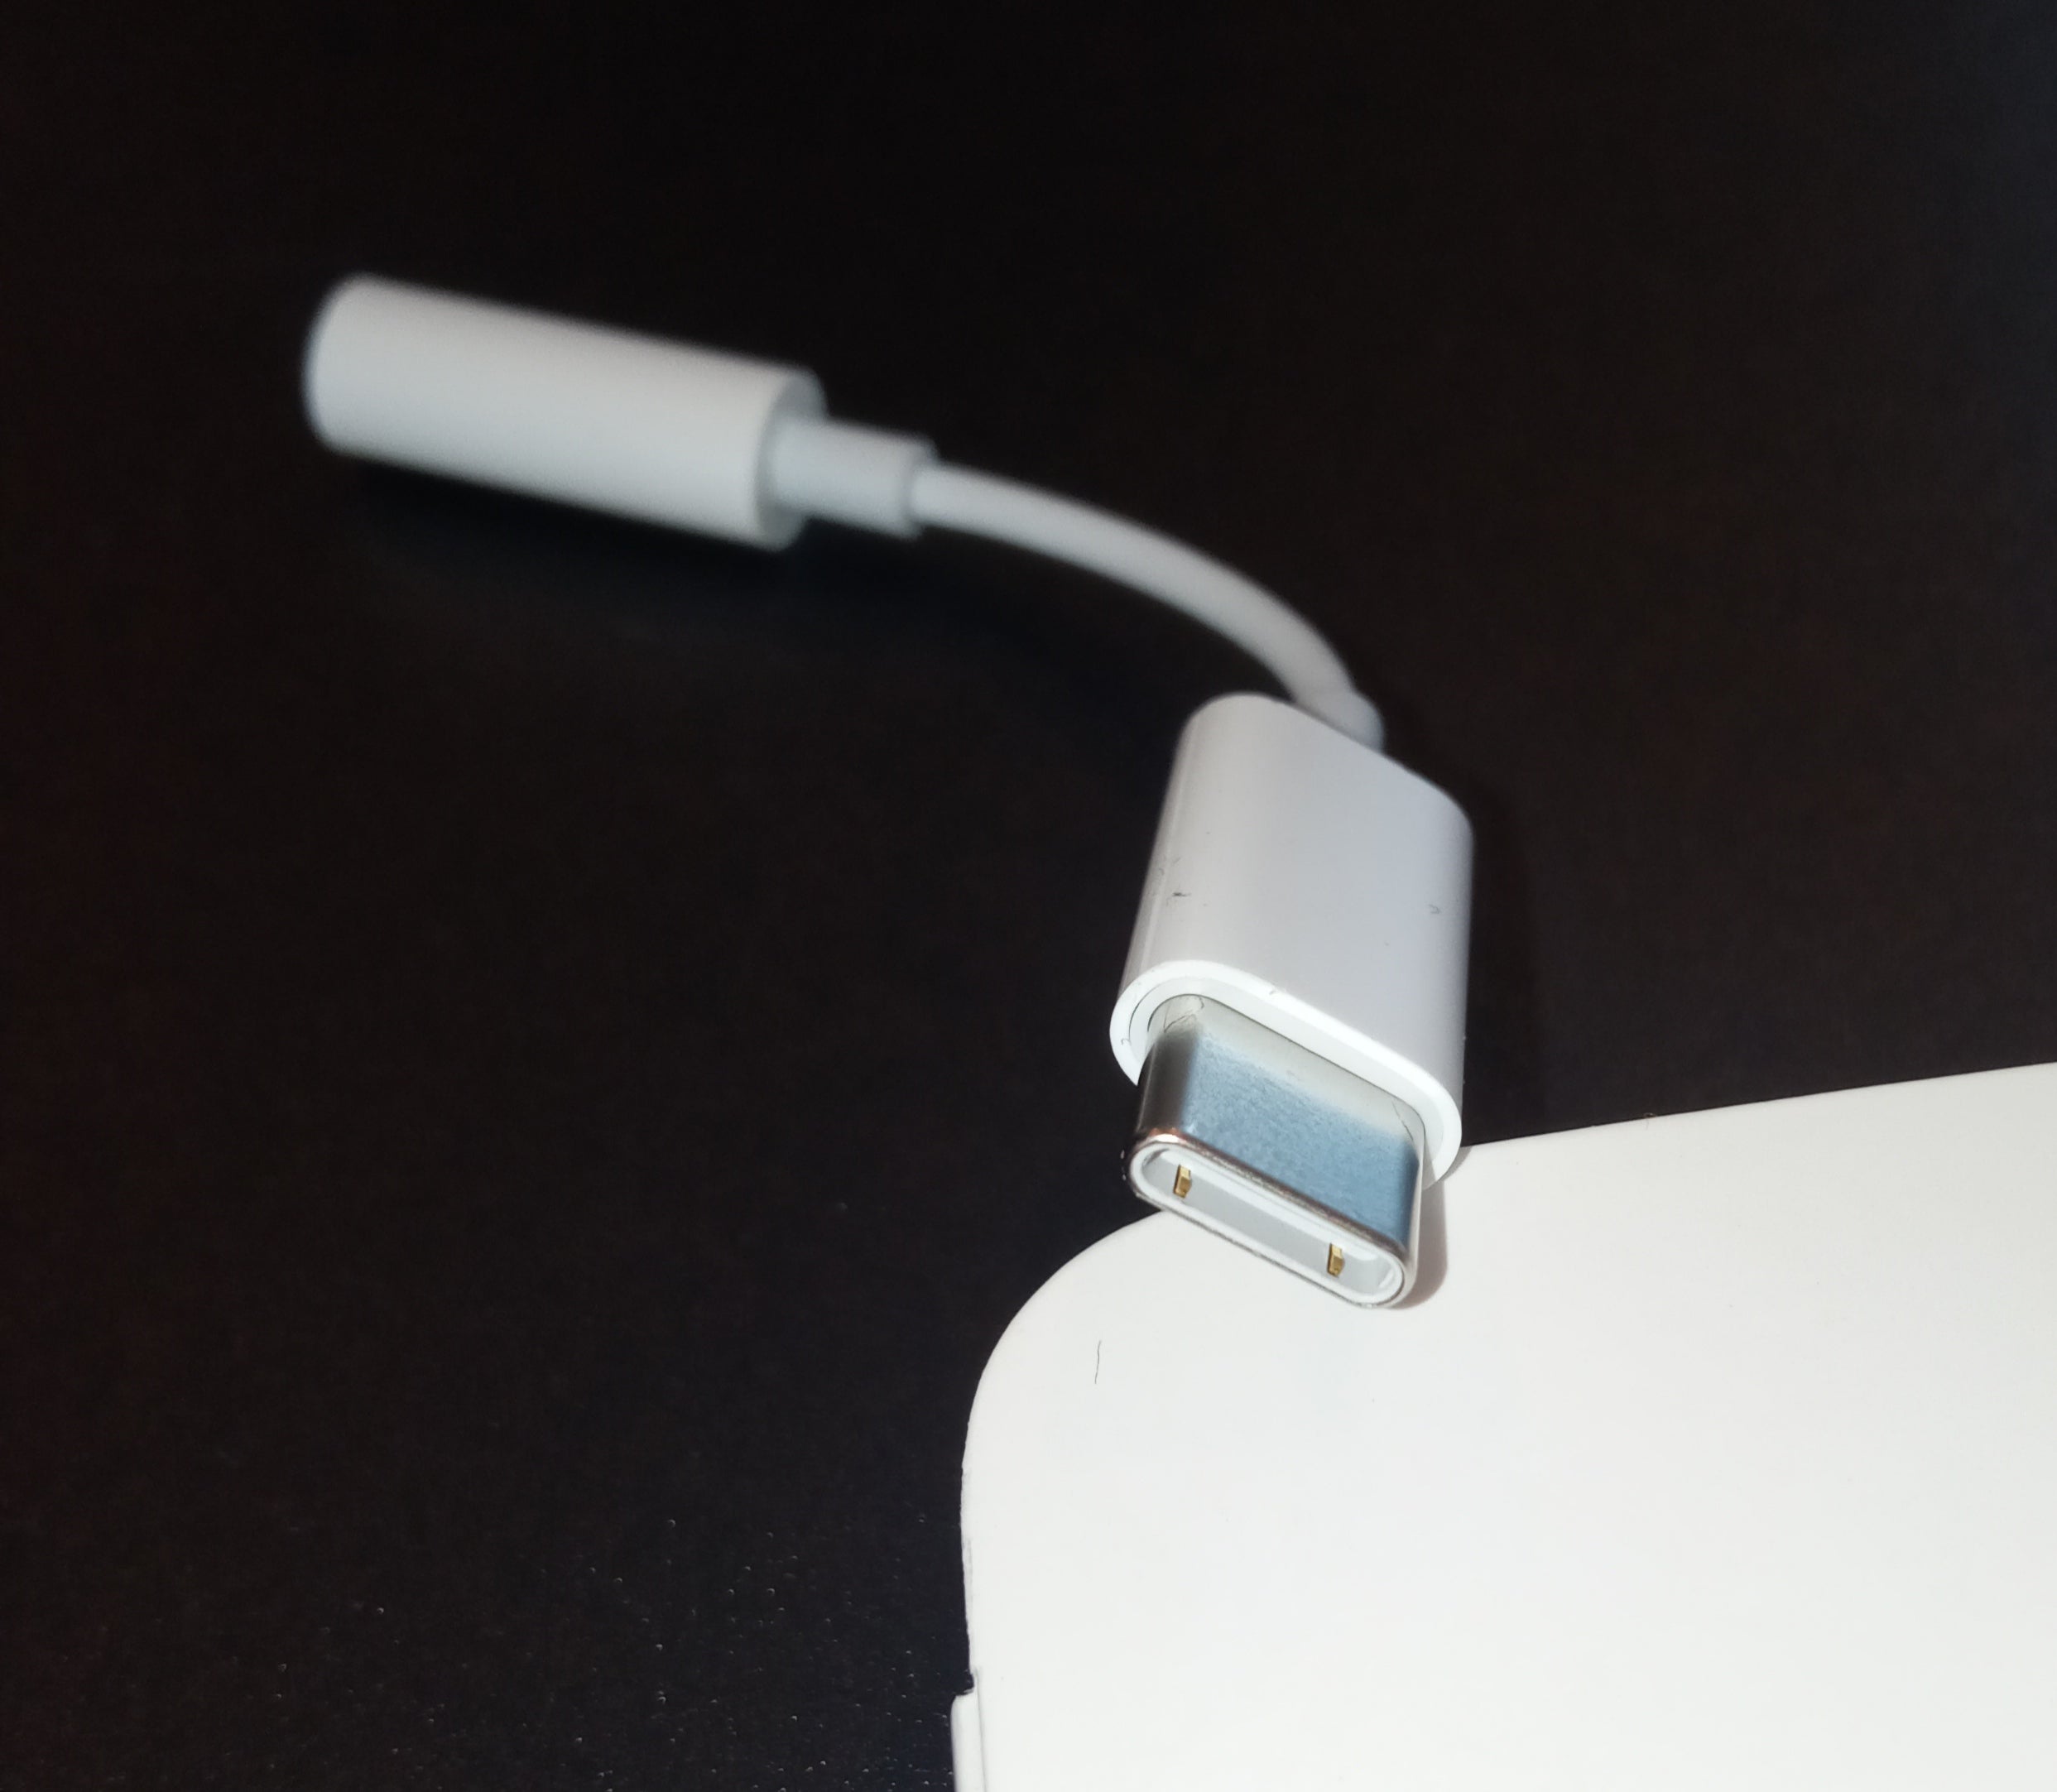 Apple USB-C to 3.5mm Headphone Jack Adapter (A2049) Genuine - One Year Warranty